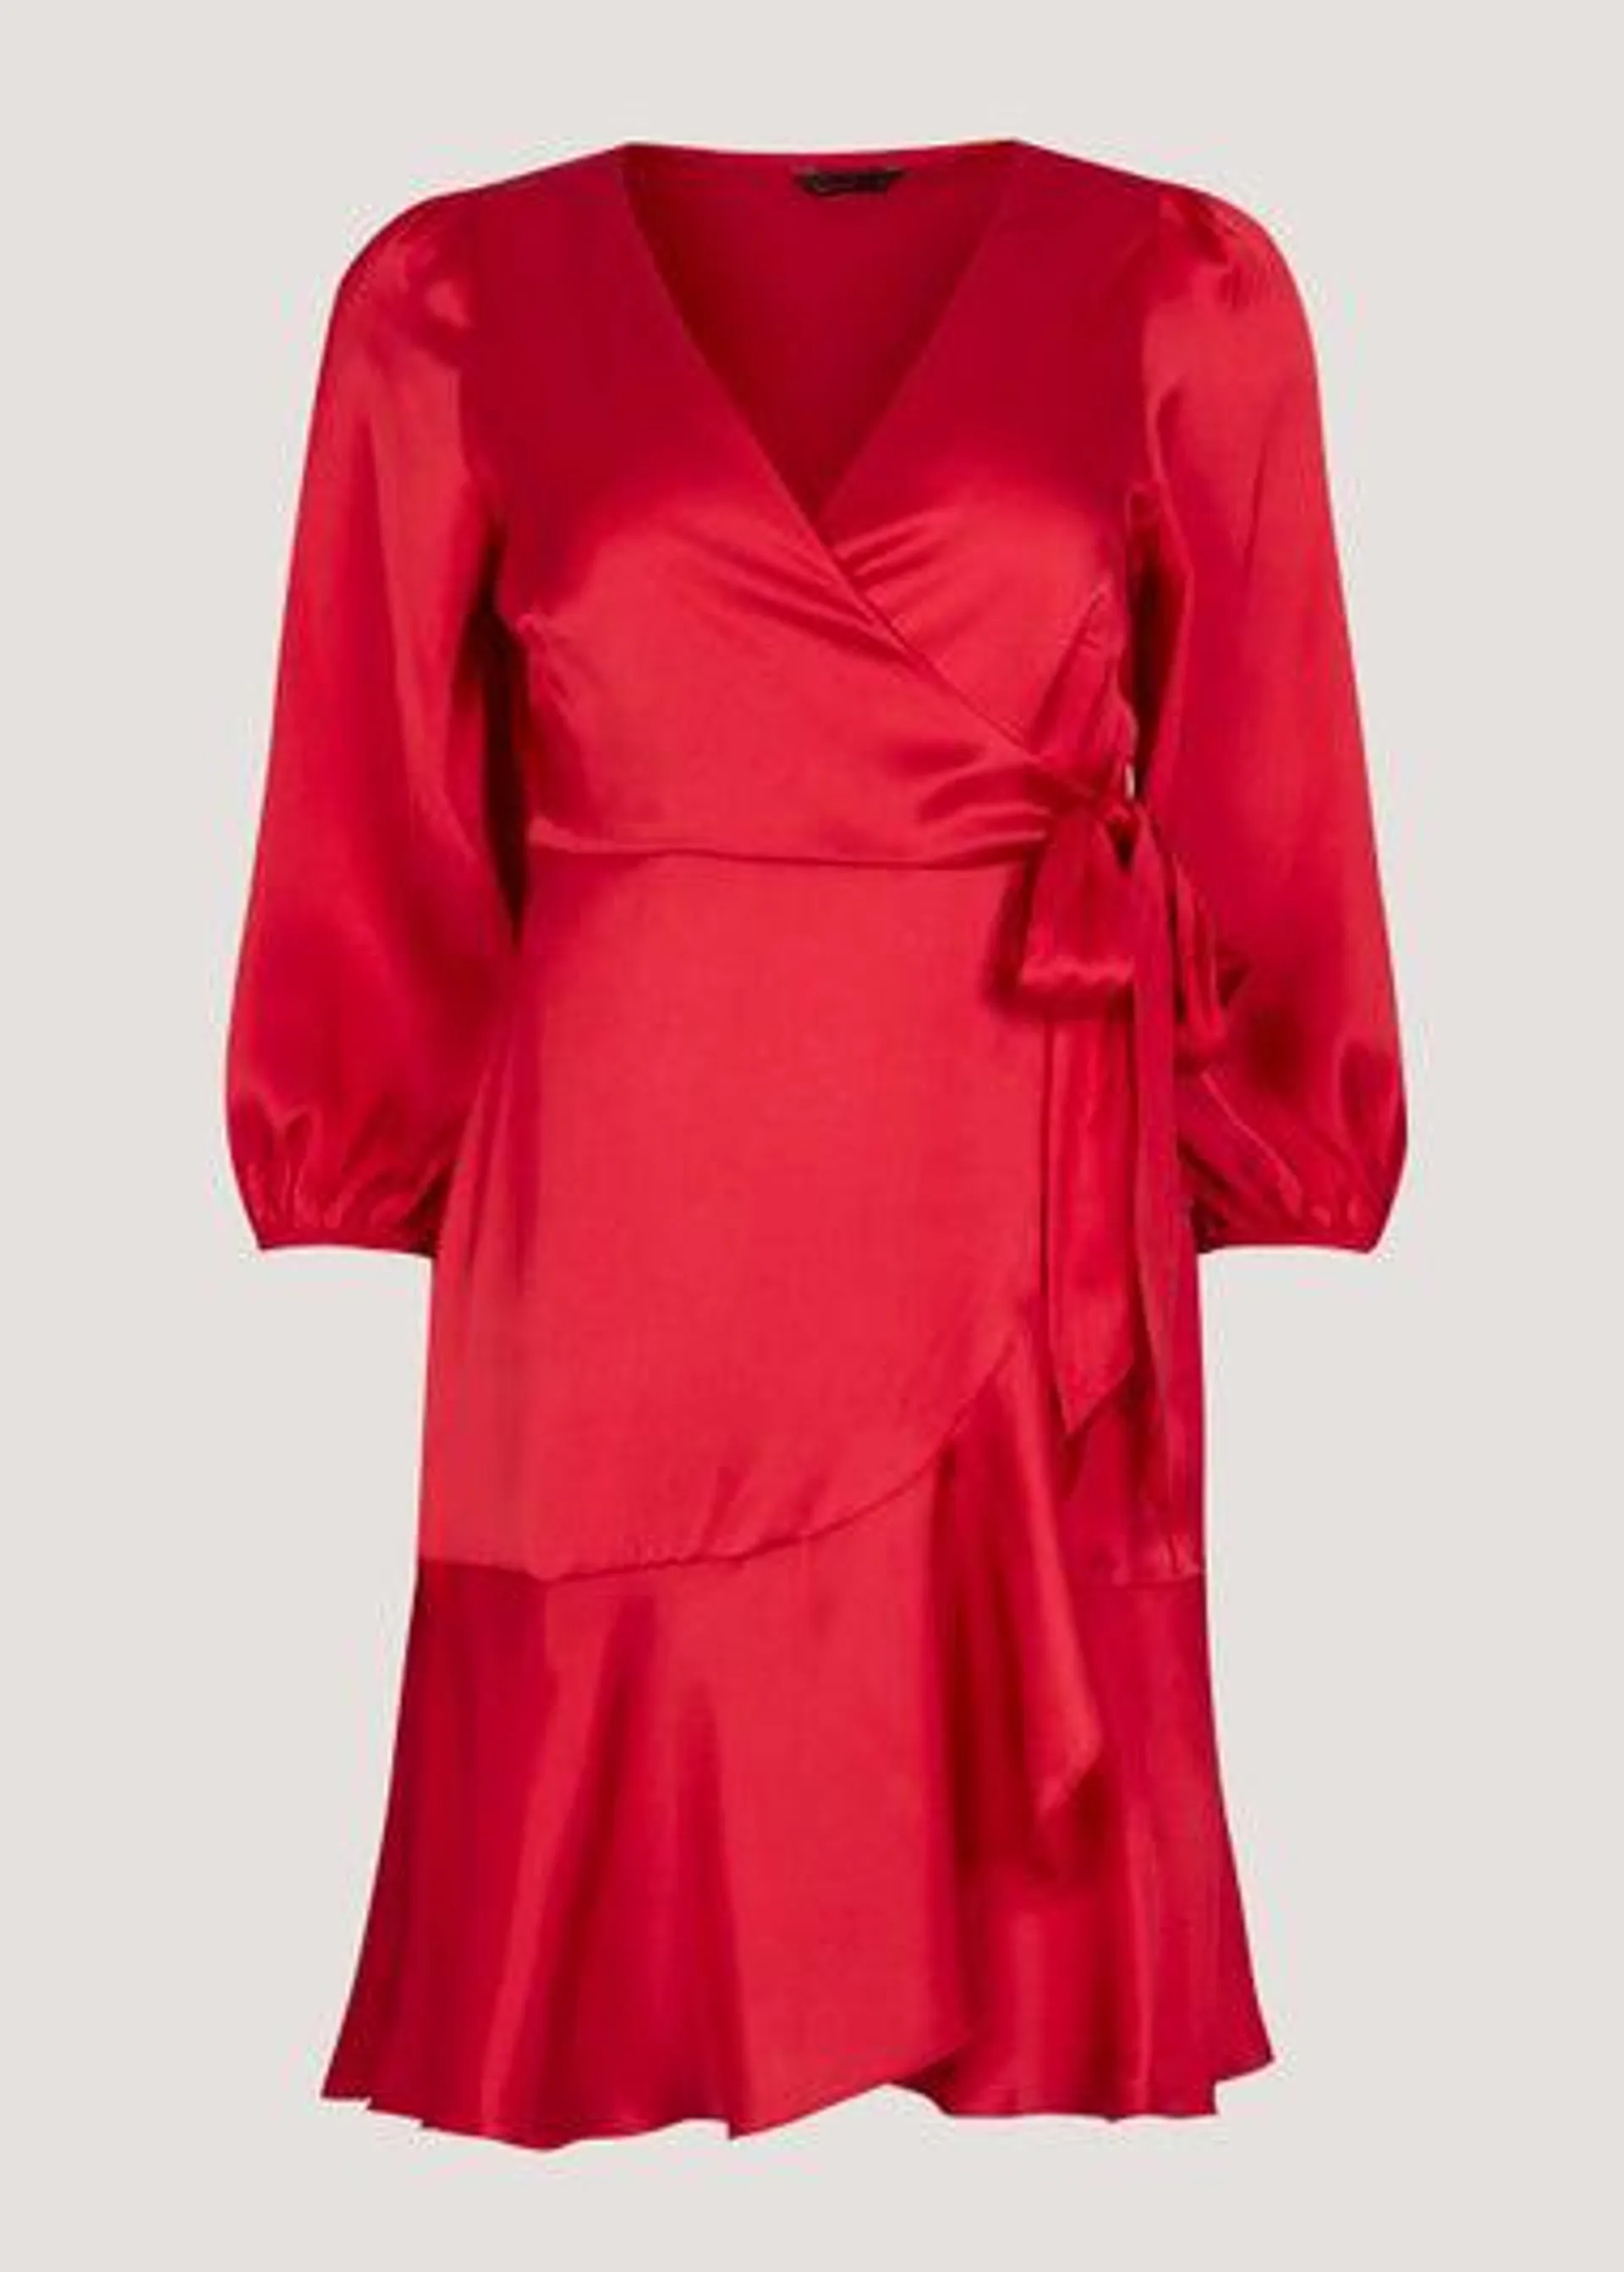 Be Beau Red Frill Satin Mini Dress - Size 6